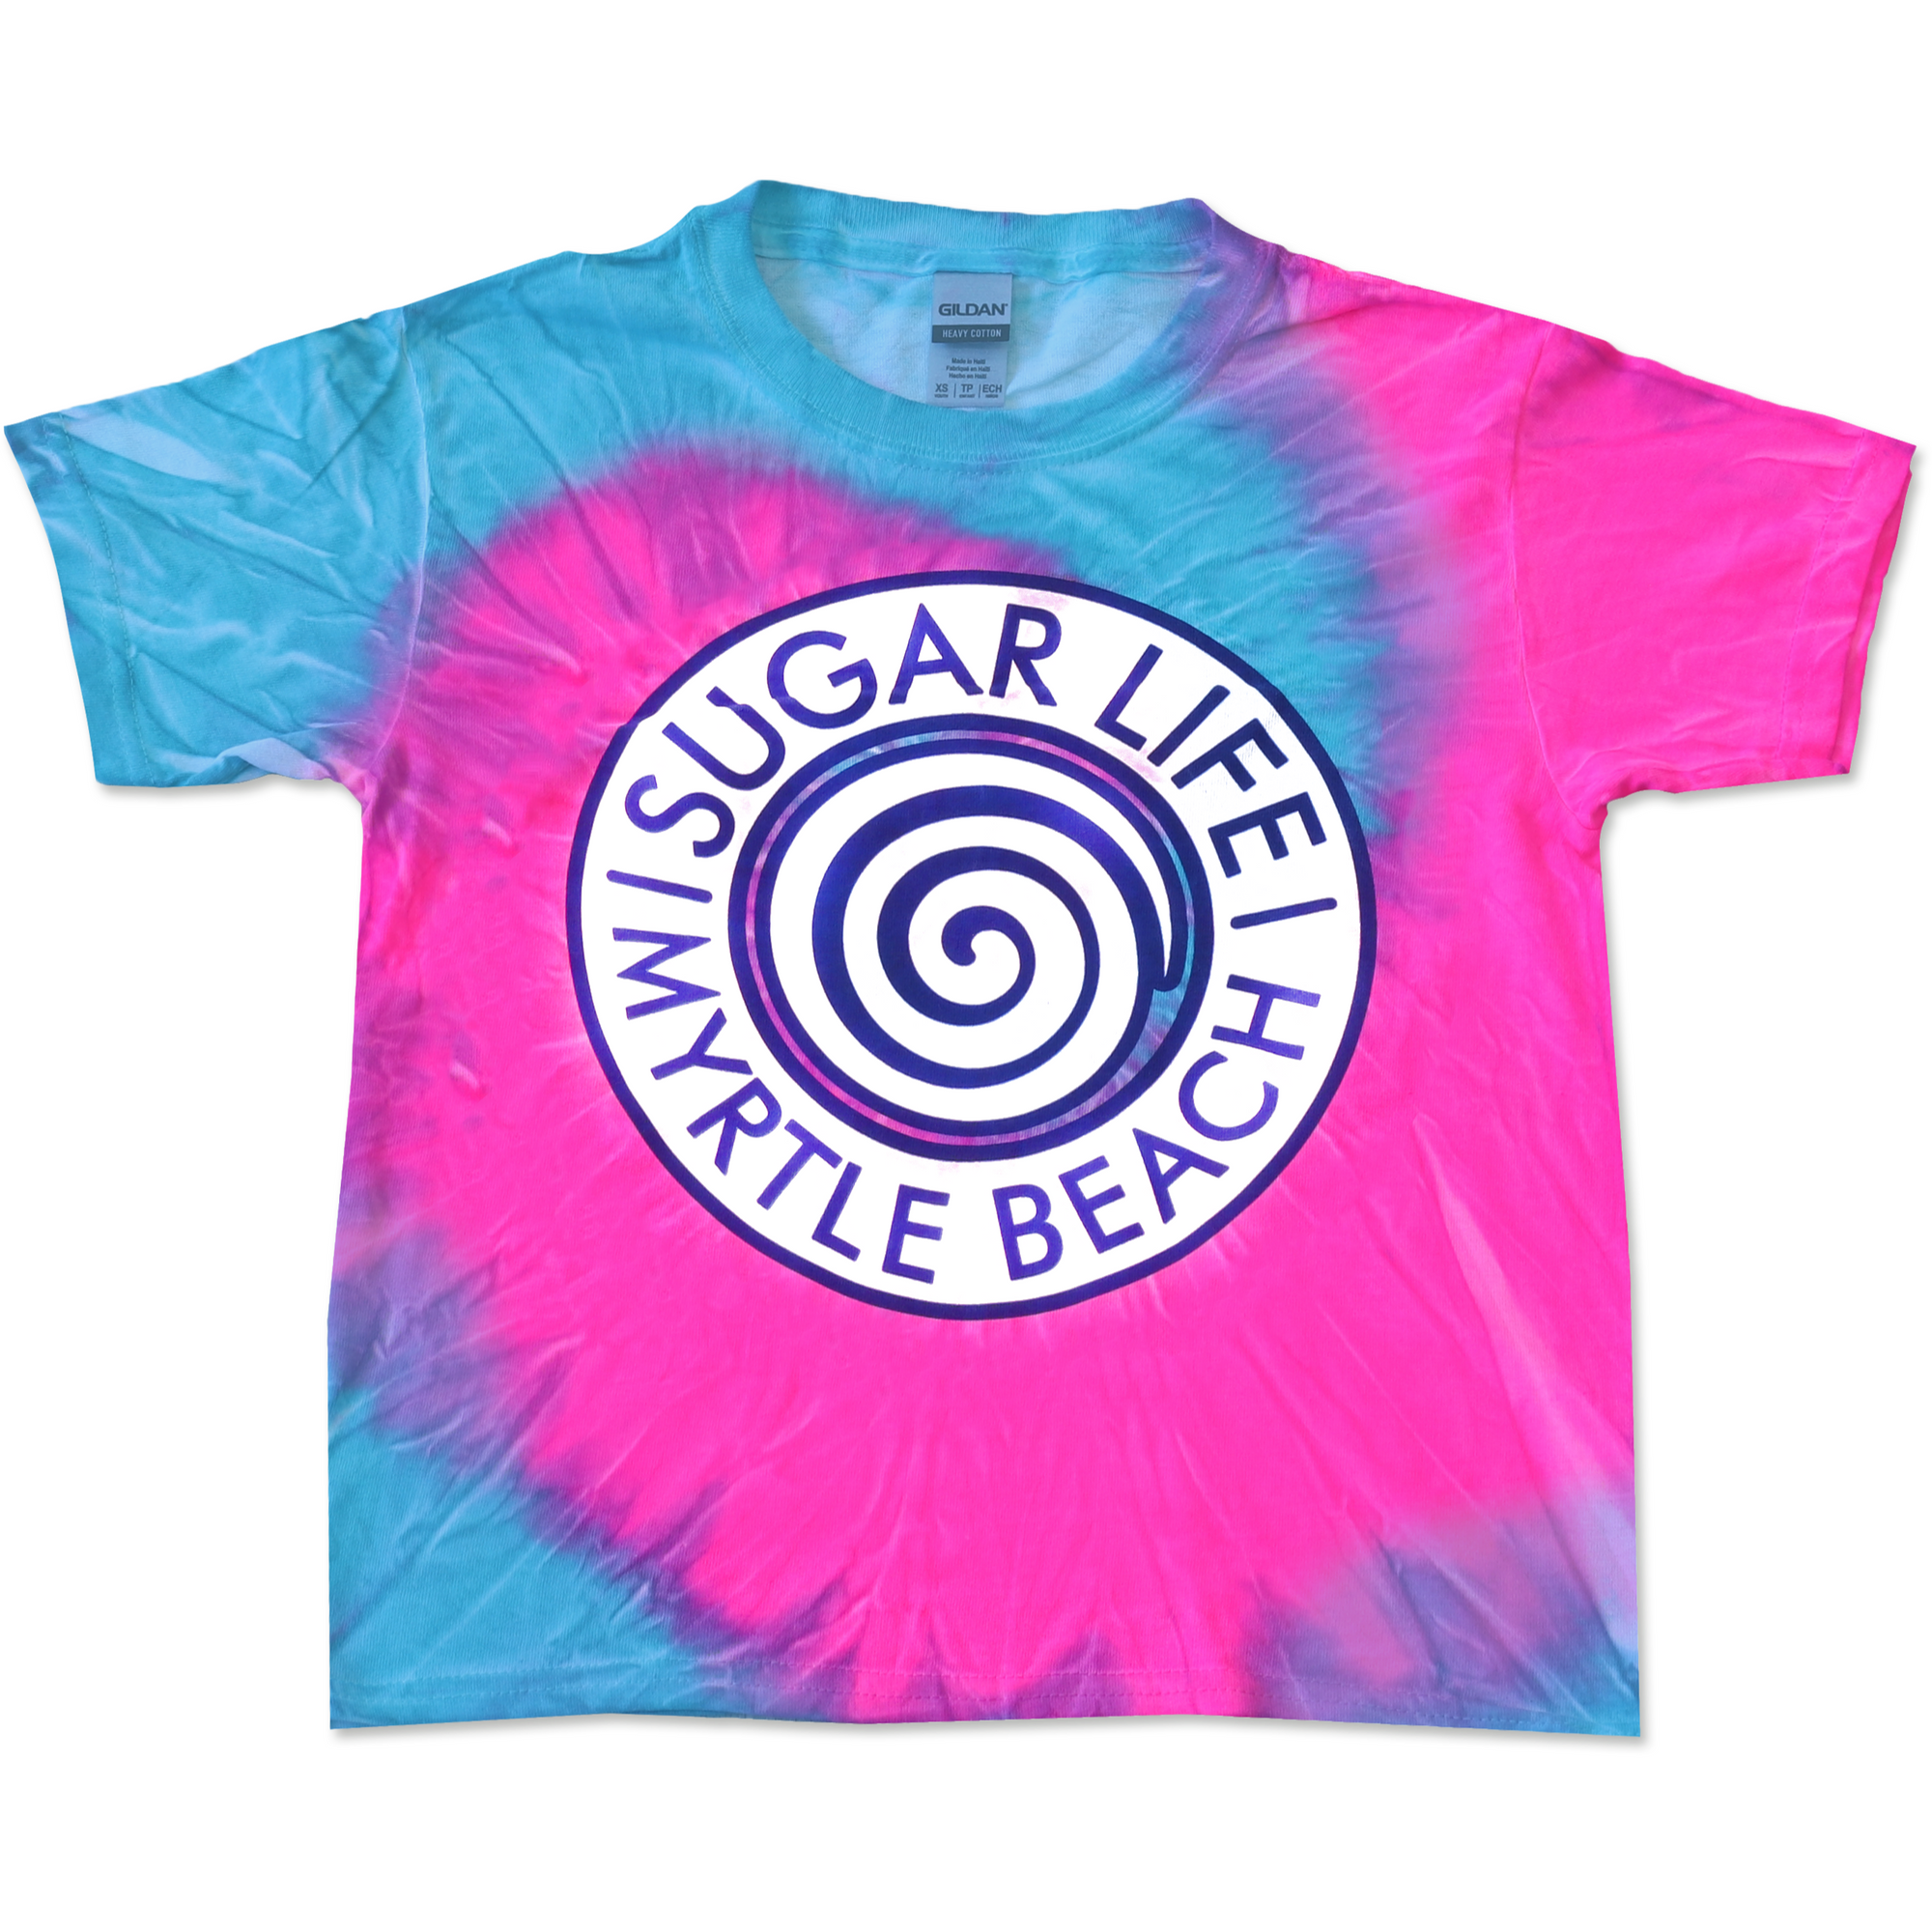 Candy Swirl Kids T-Shirt - Pink & Blue Cotton Candy Tie Dye